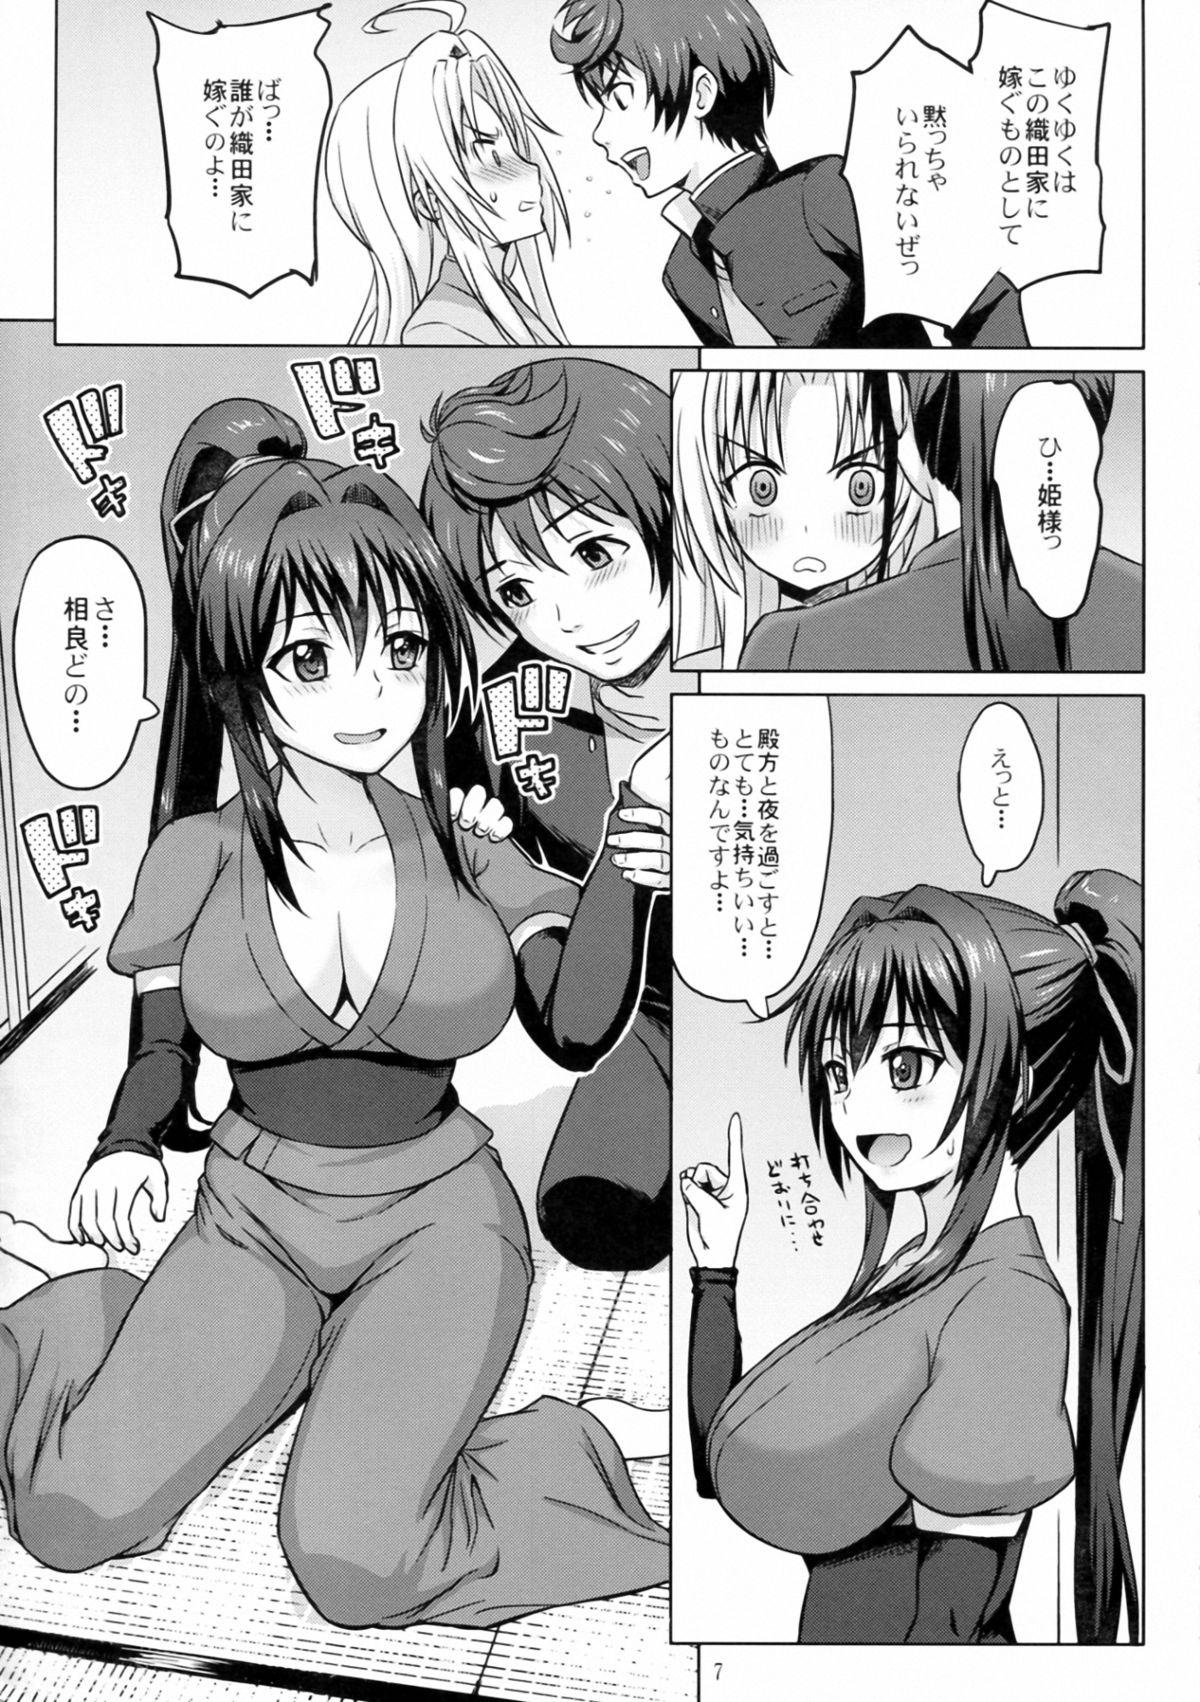 Playing Oda Nobuna ga! - Oda nobuna no yabou Hot Women Having Sex - Page 9